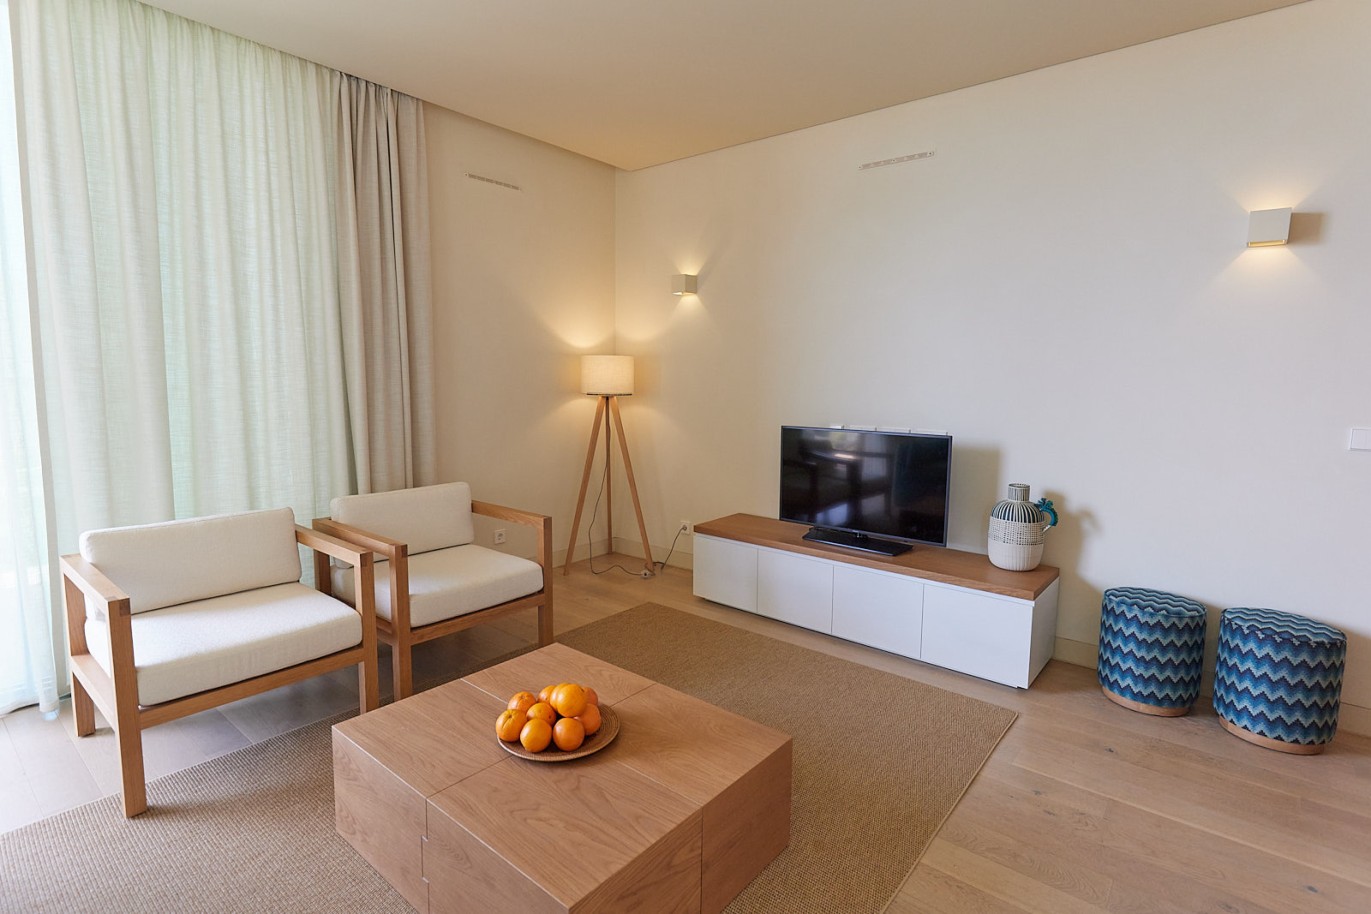 2 bedroom apartment in resort, for sale in Porches, Algarve_230571